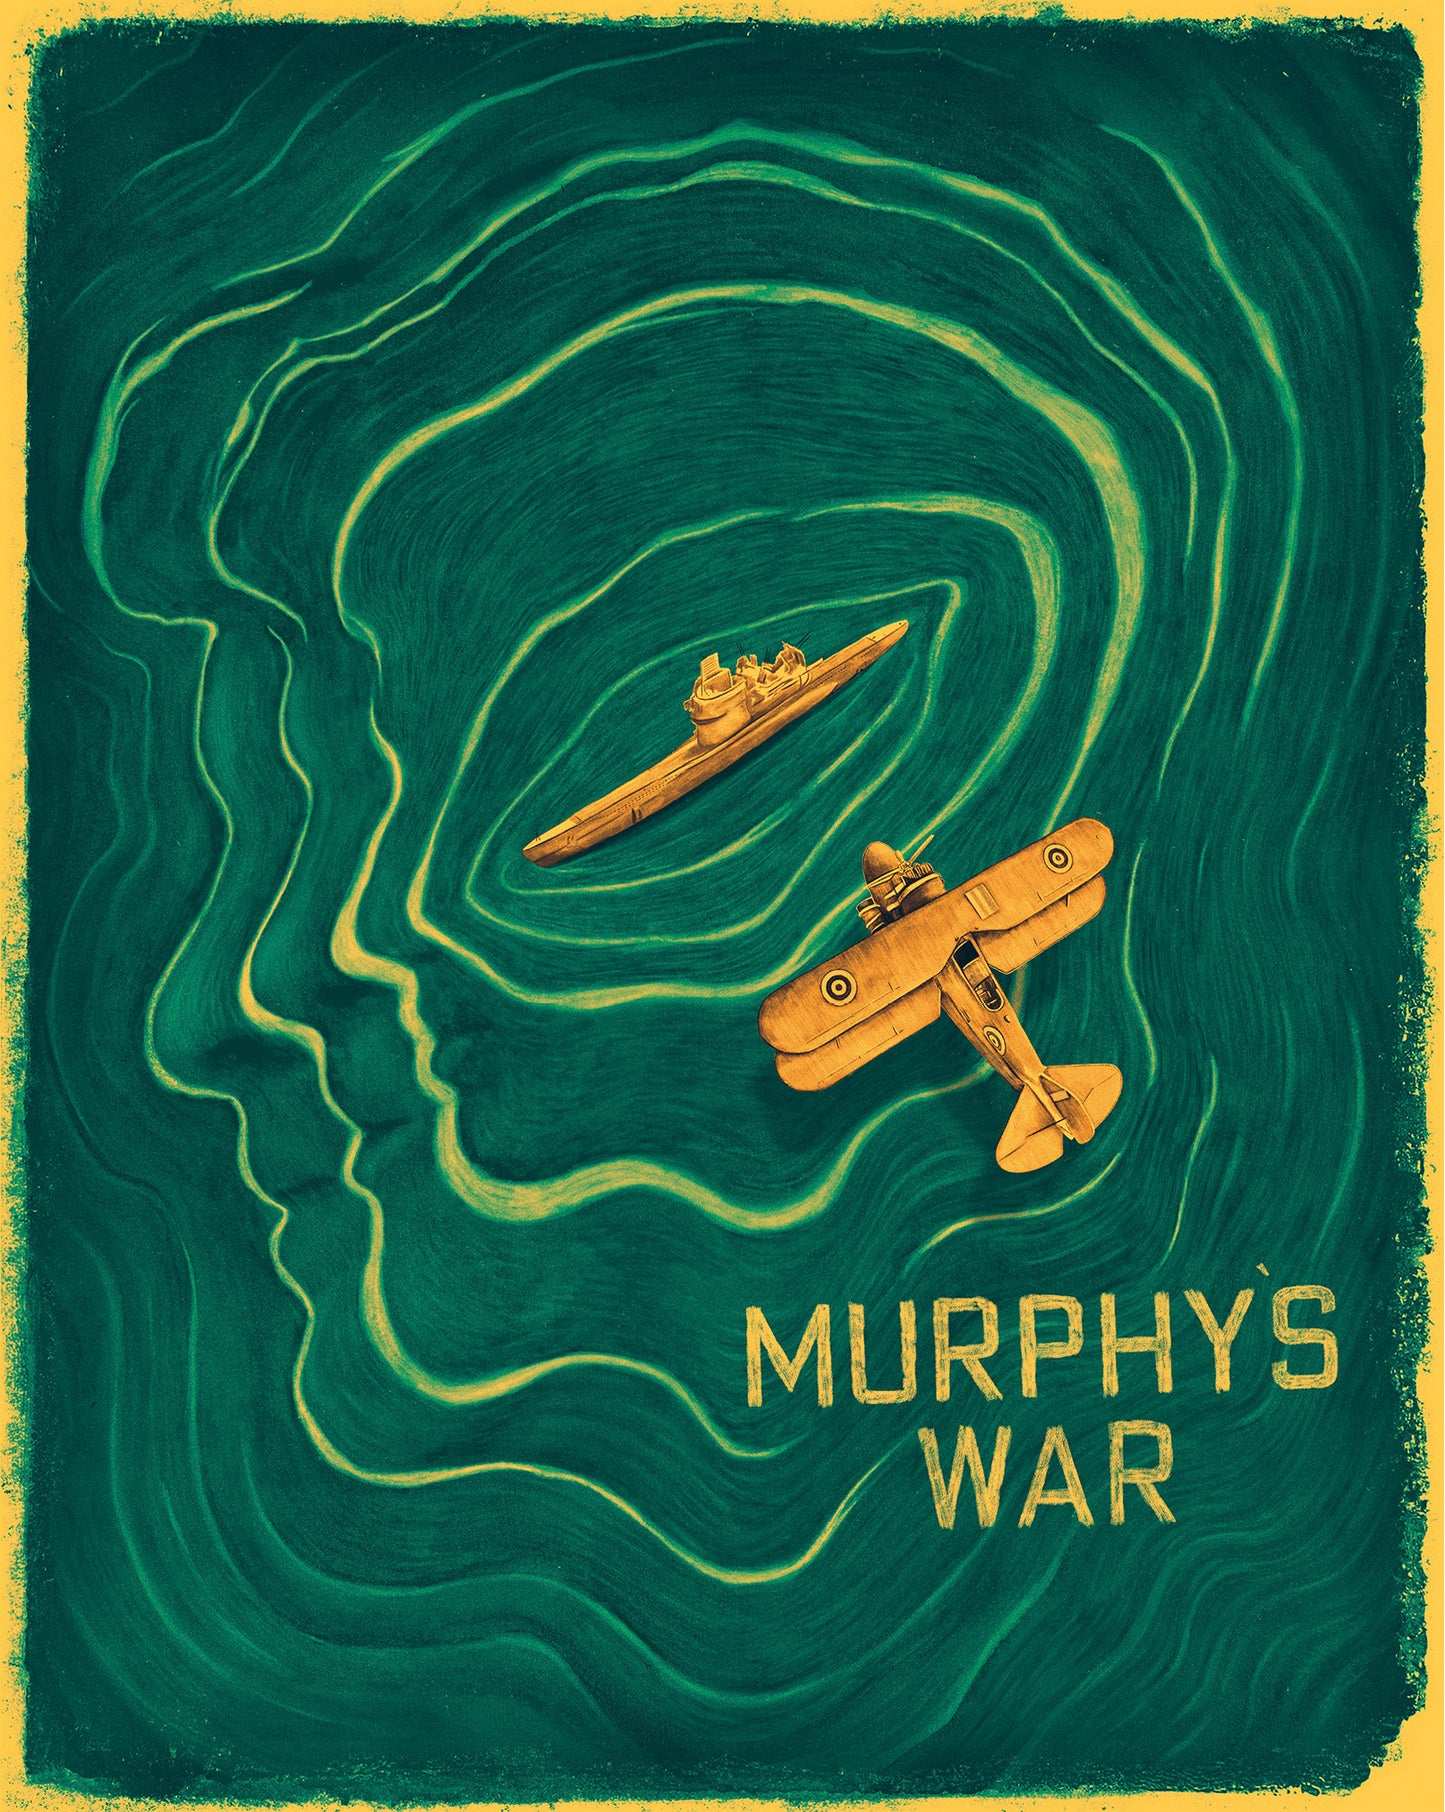 Murphy's War Blu-ray Limited Edition with Slipcover (Arrow U.S.)